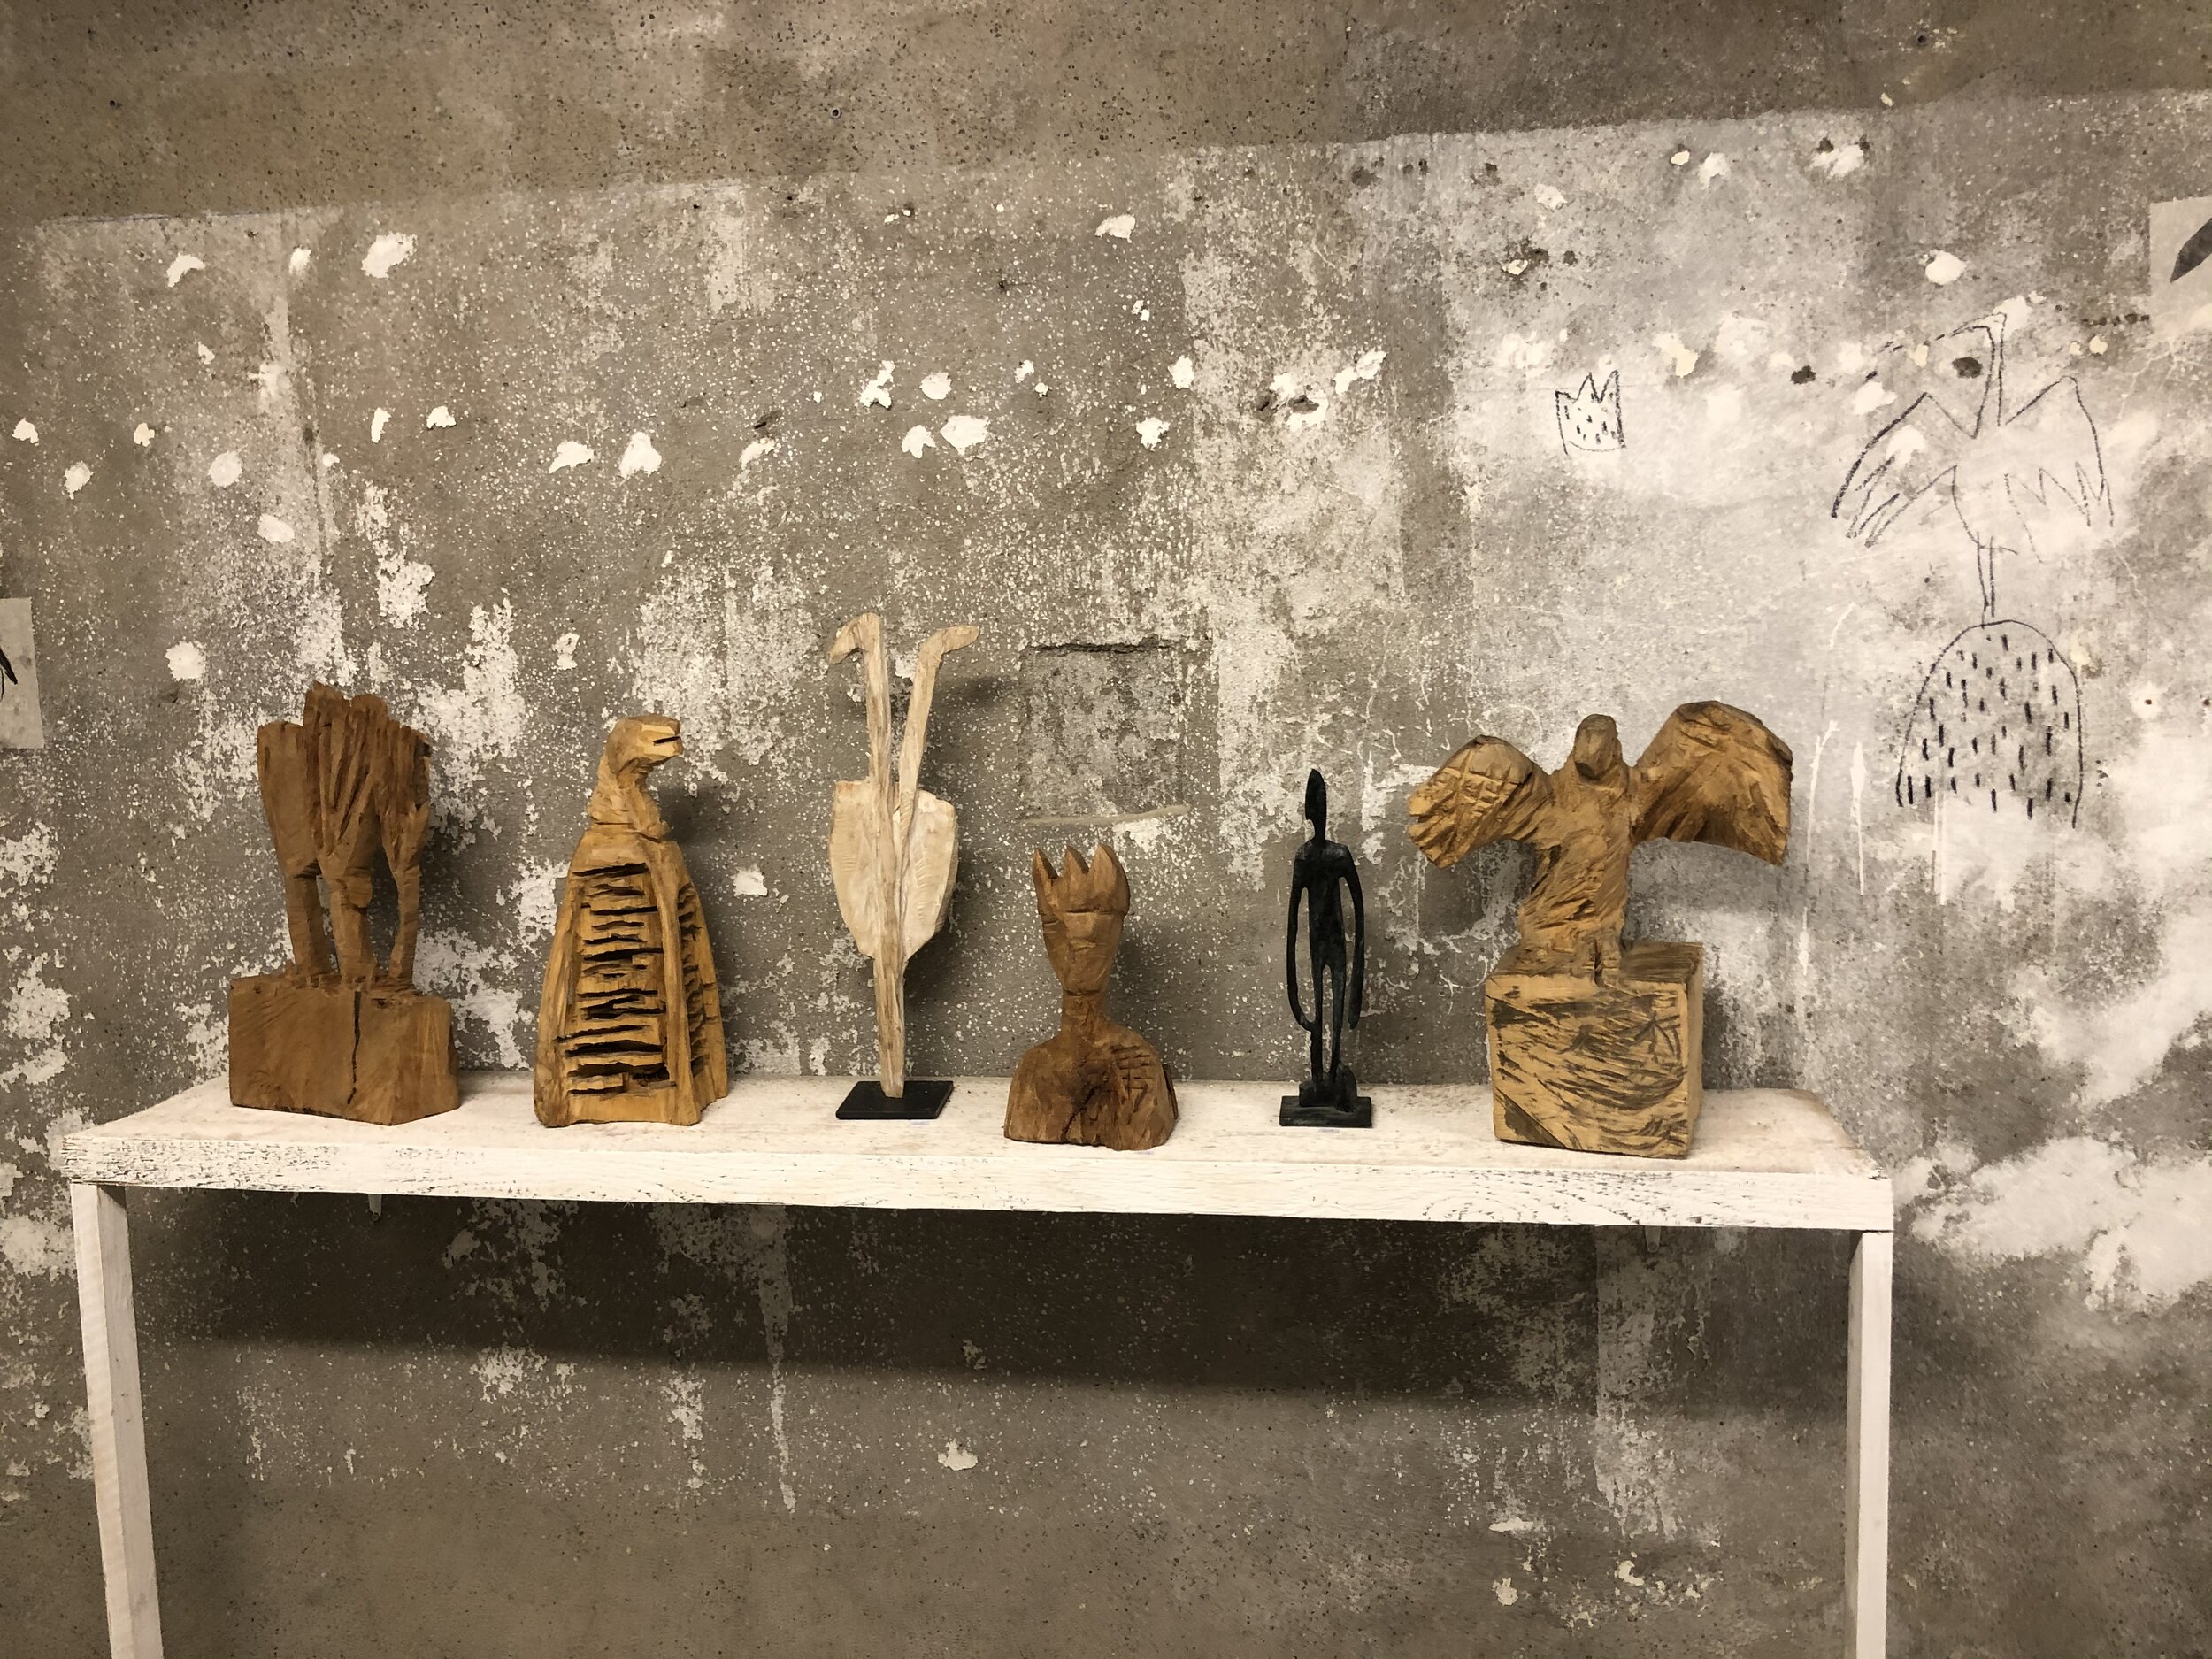 Galerie Rheinart, 2019